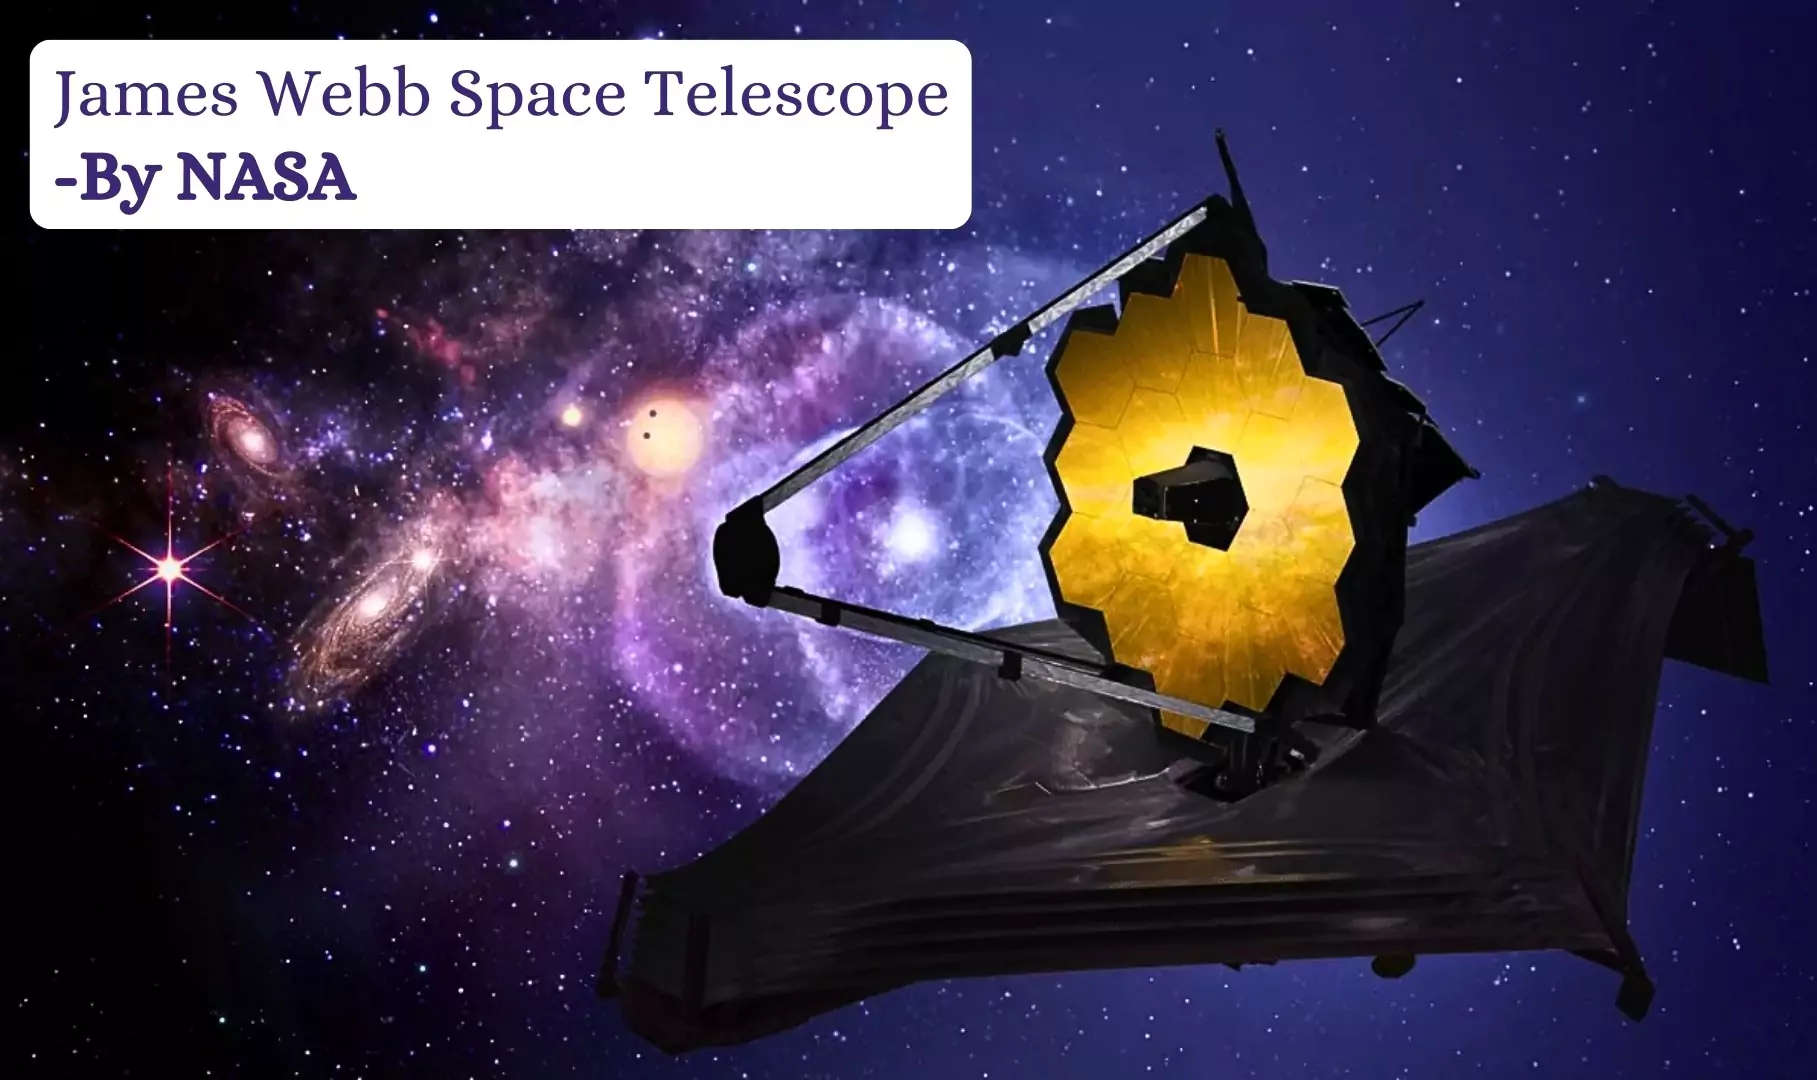  James Webb Space Telescope
